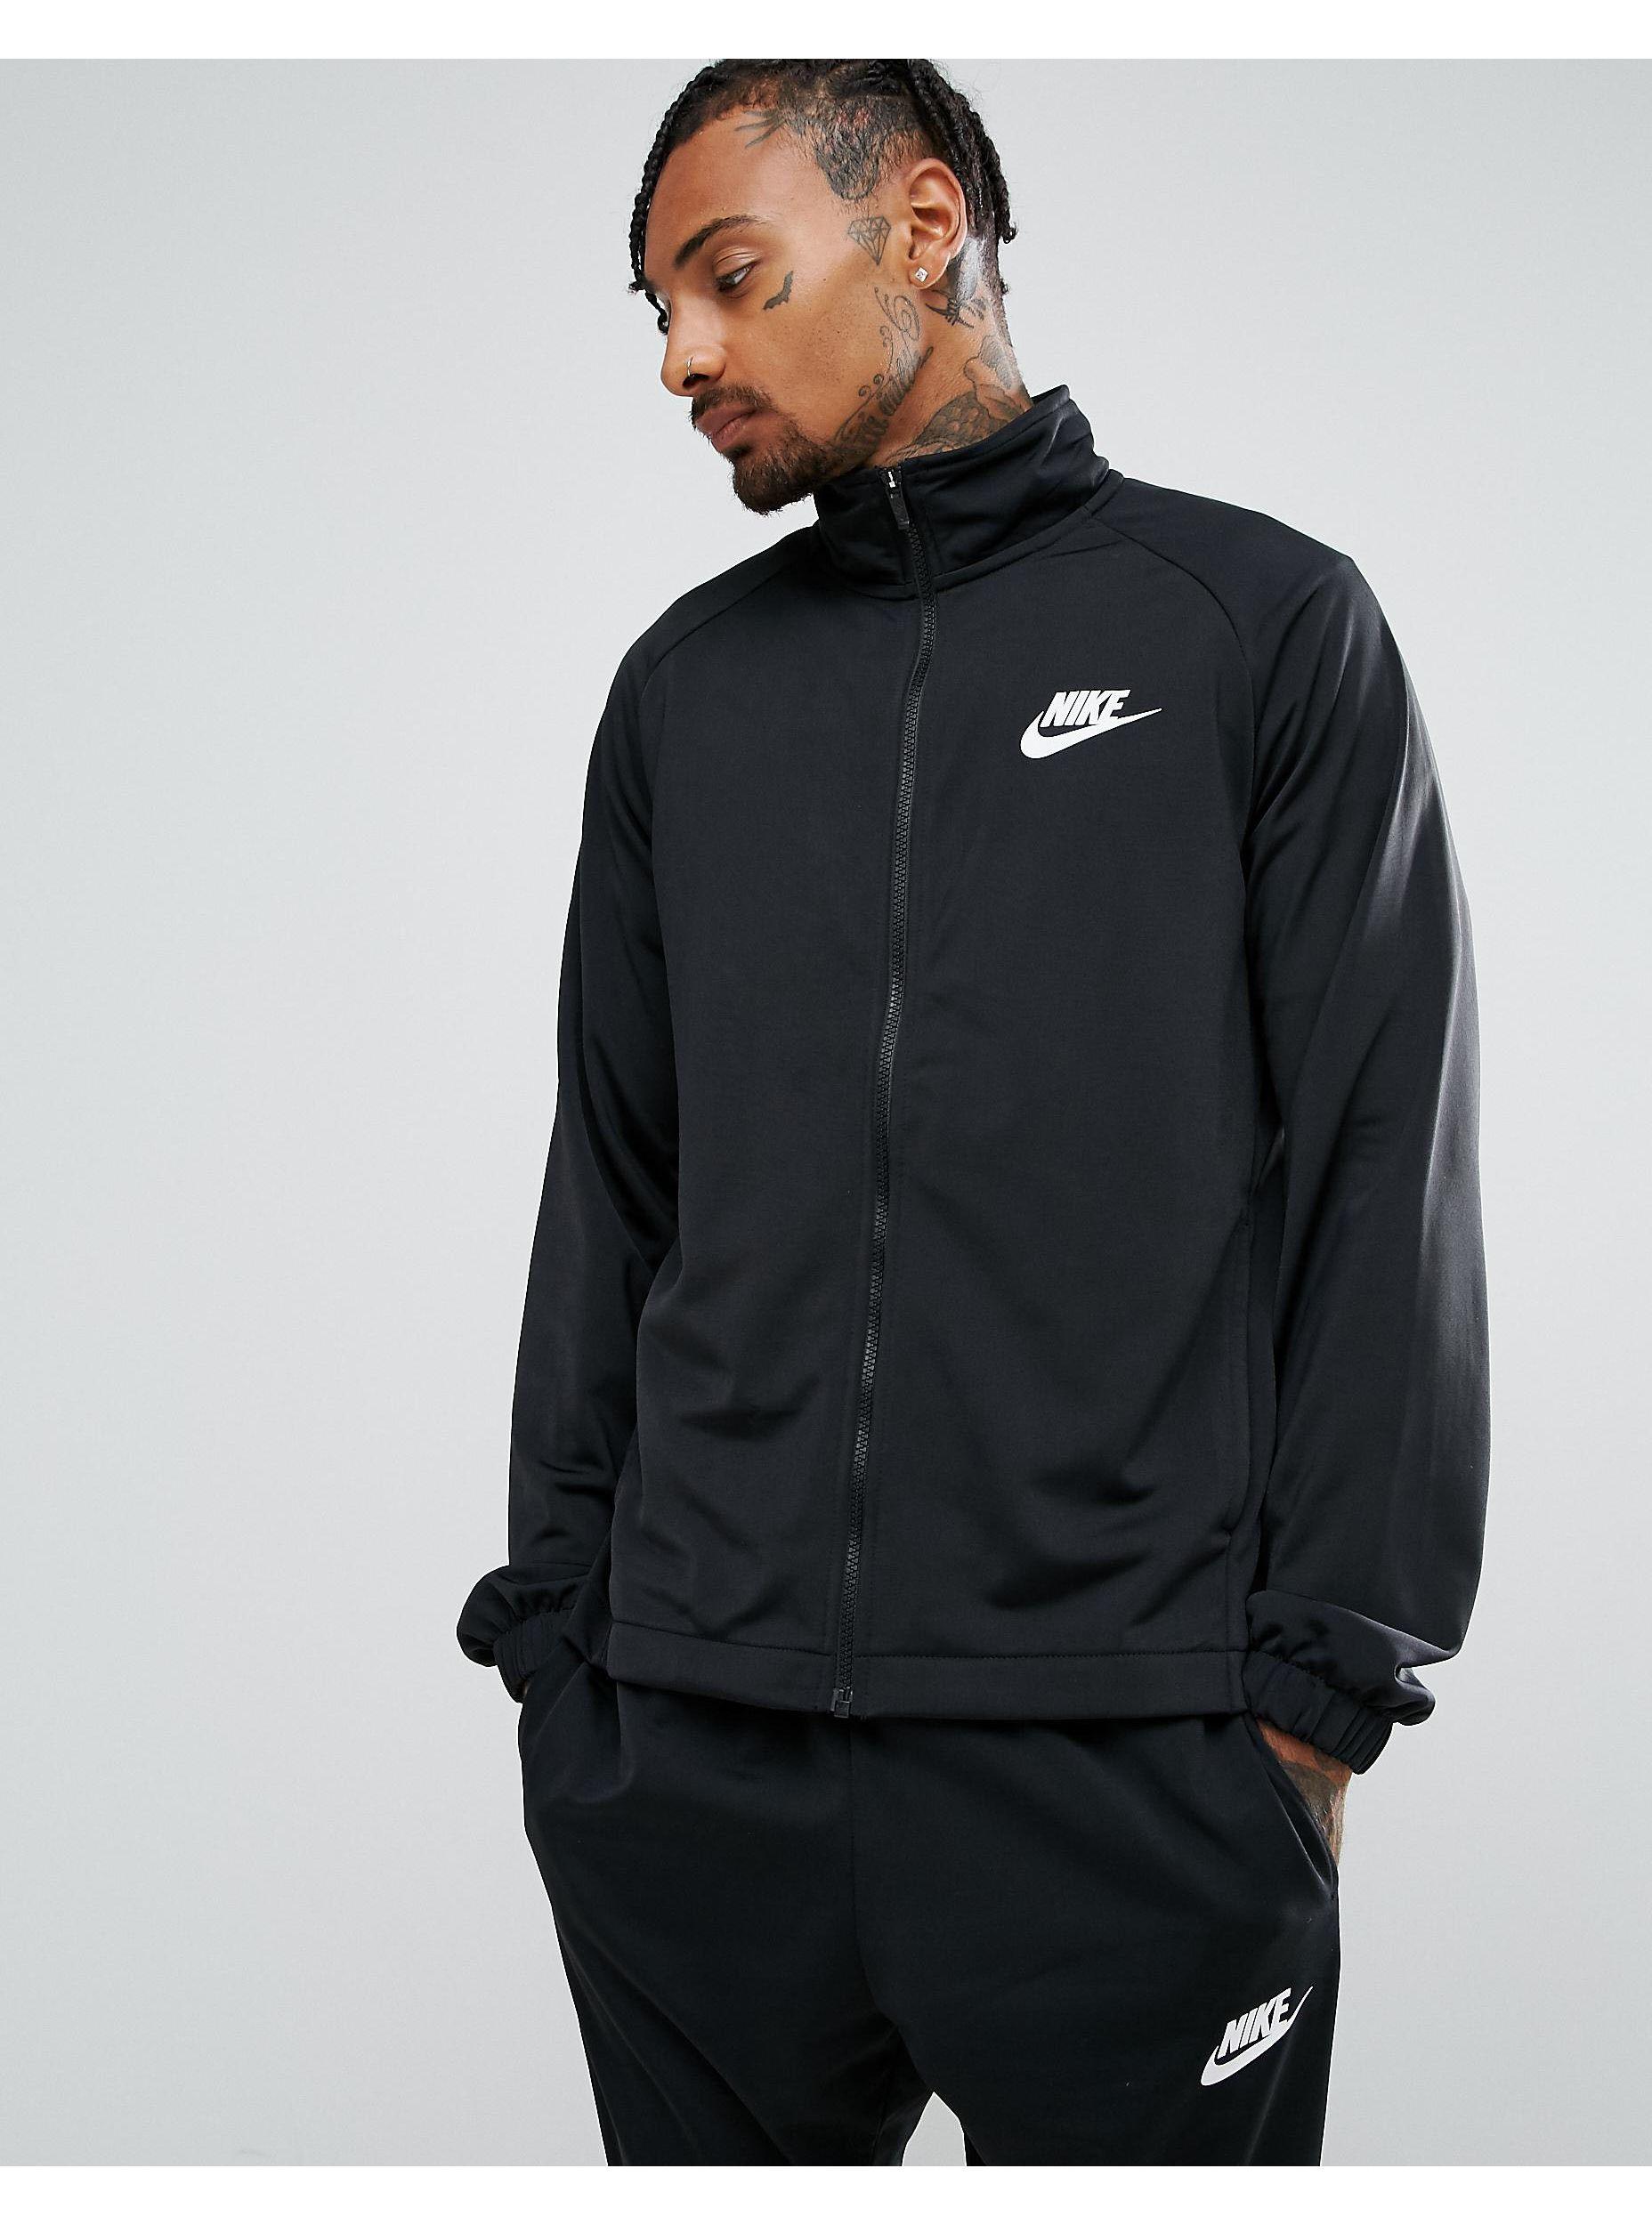 Nike Polyknit Tracksuit Set in Black Men